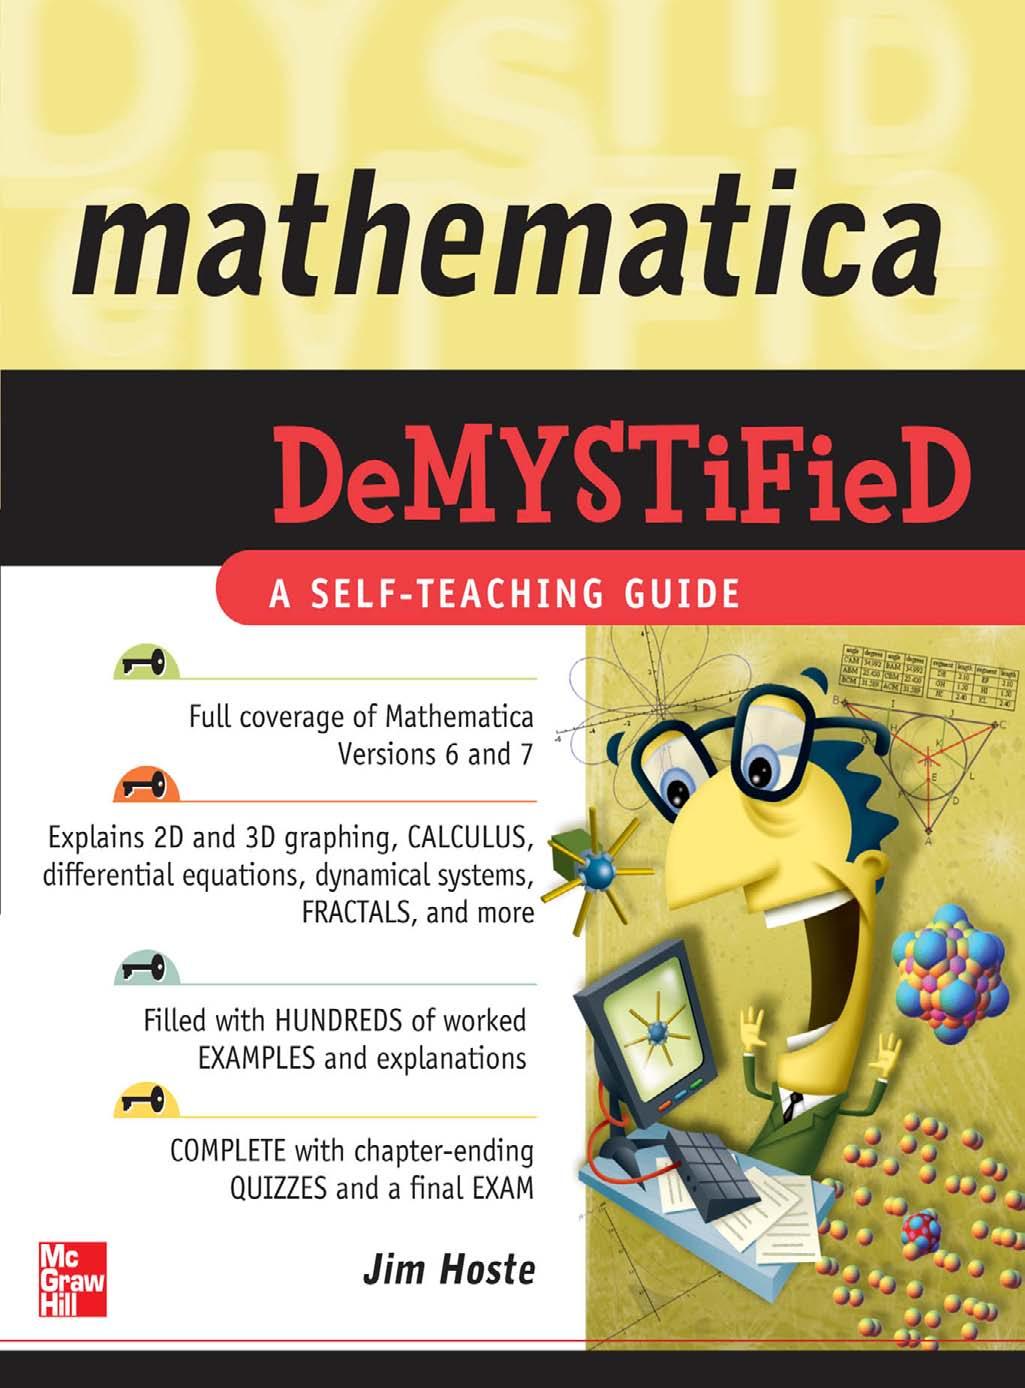 Mathematica® DeMYSTiFied